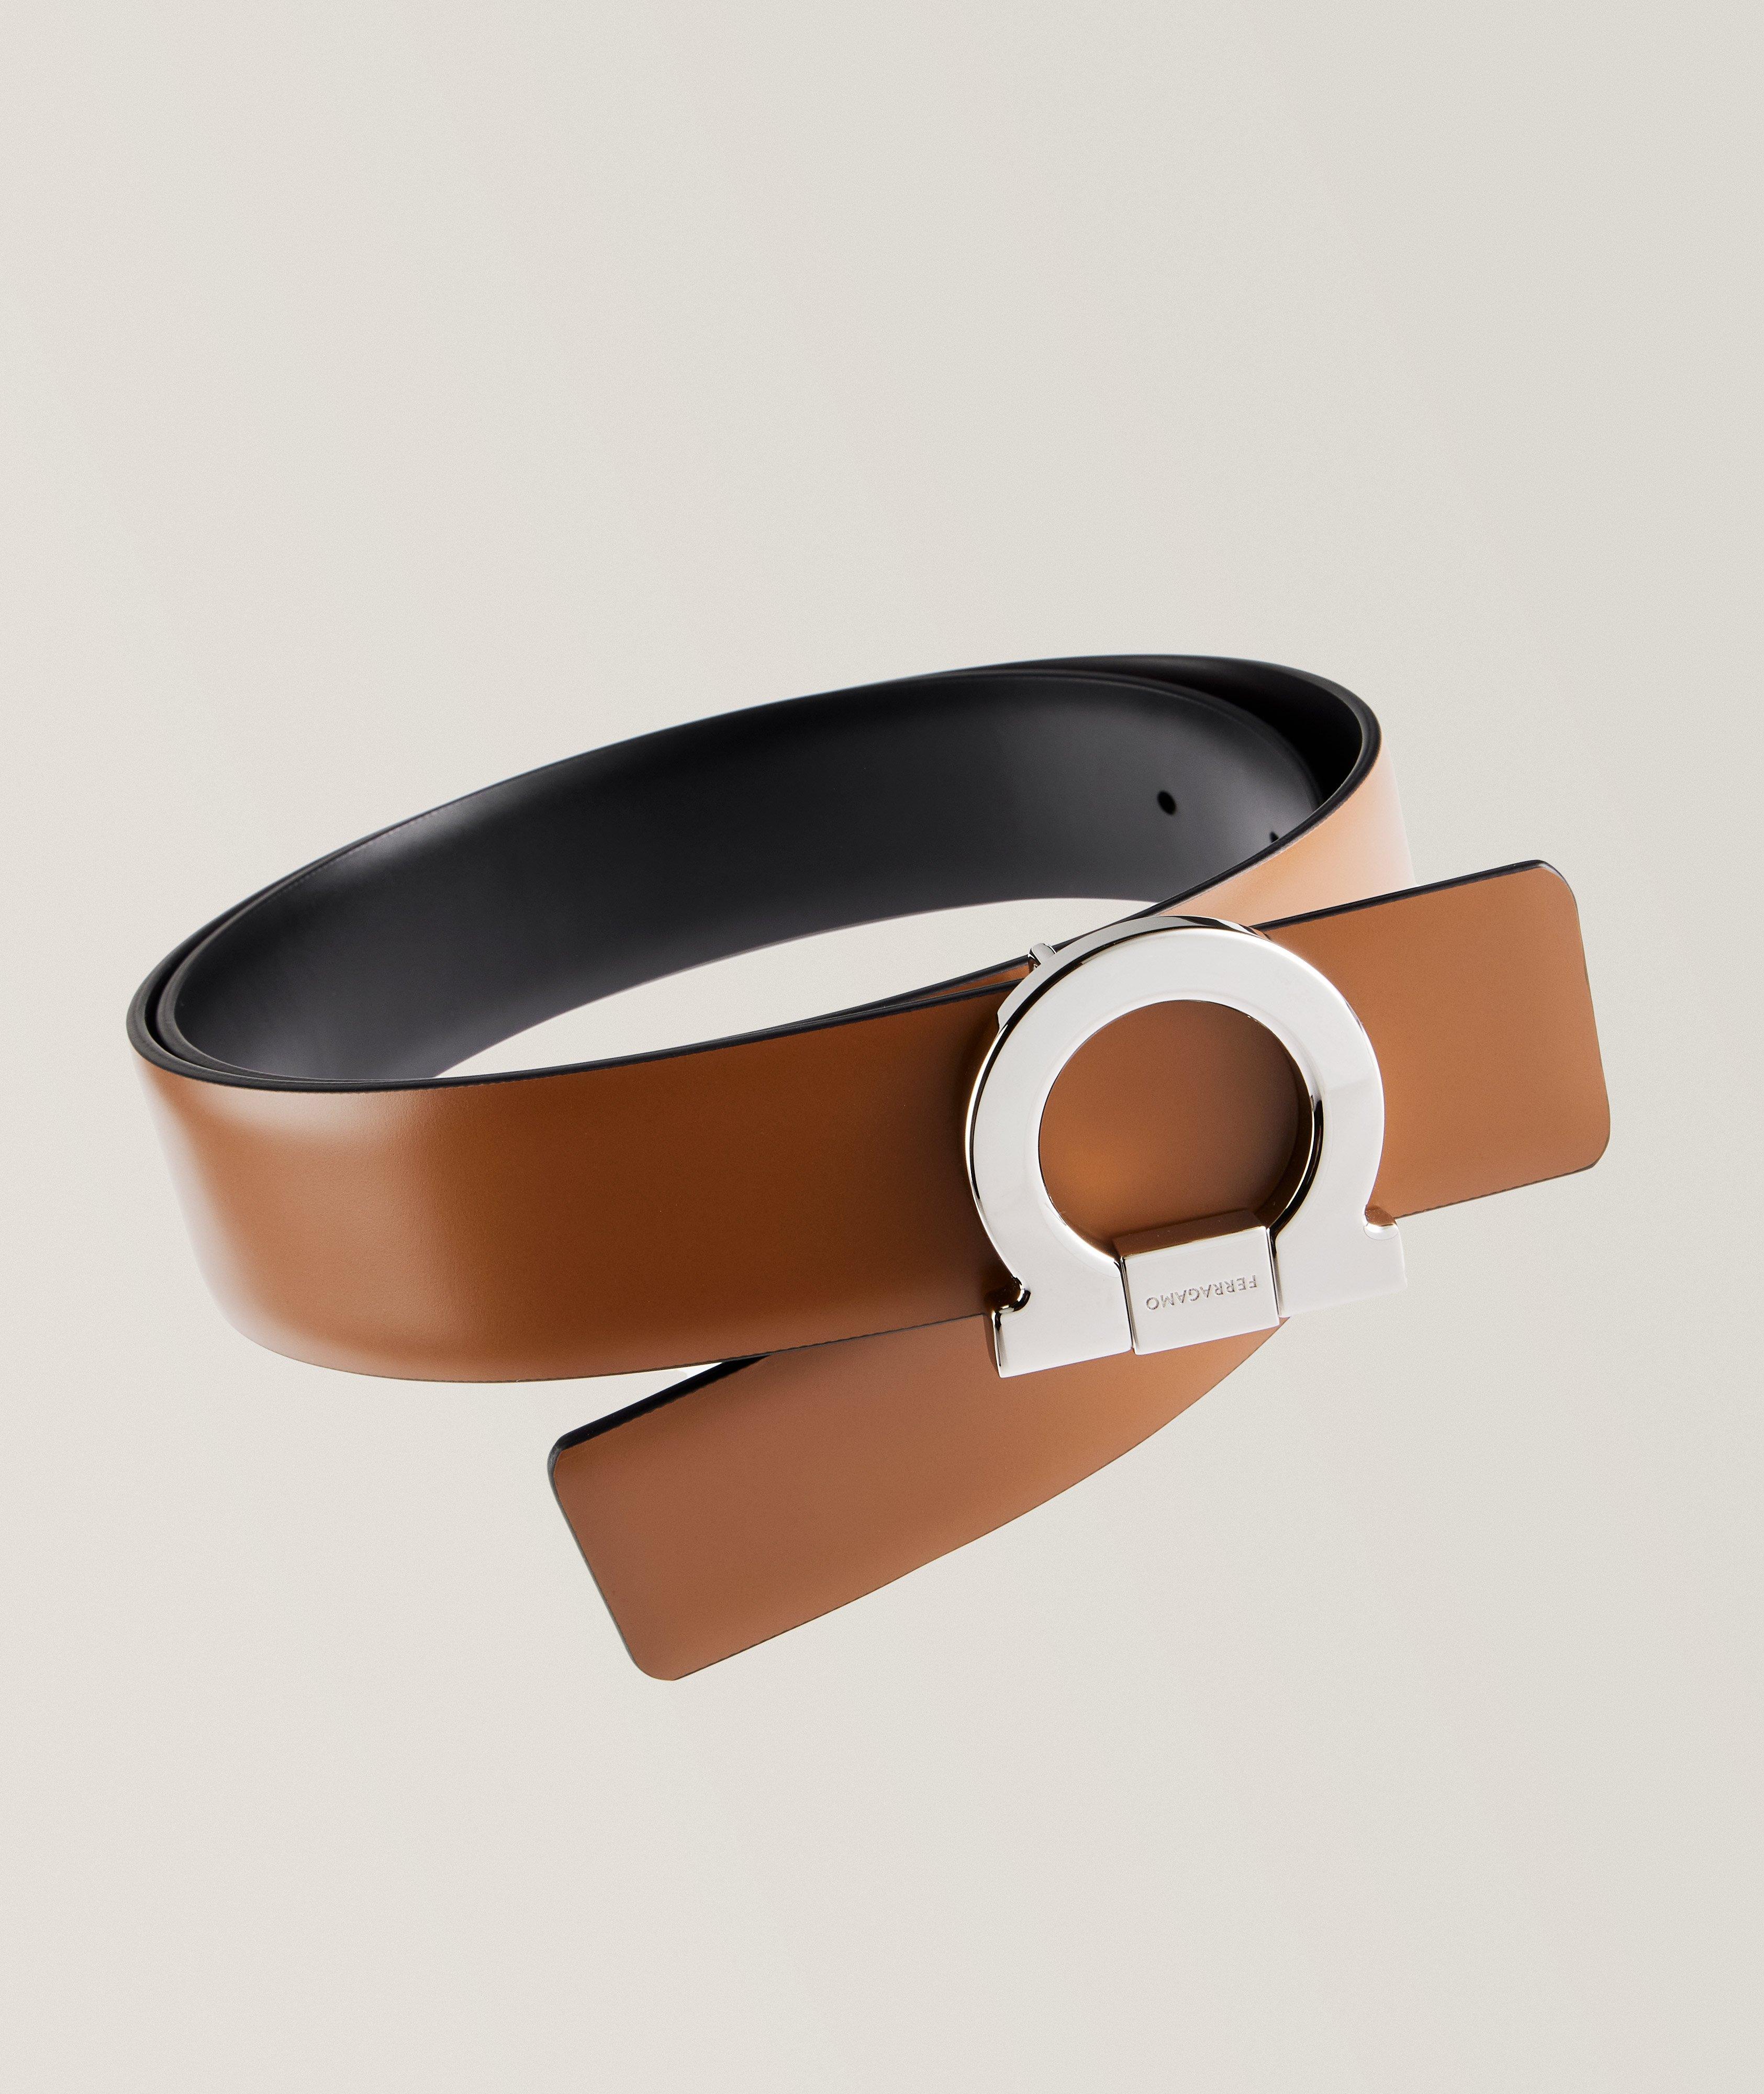 Leather Reversible Gancio Buckle Belt